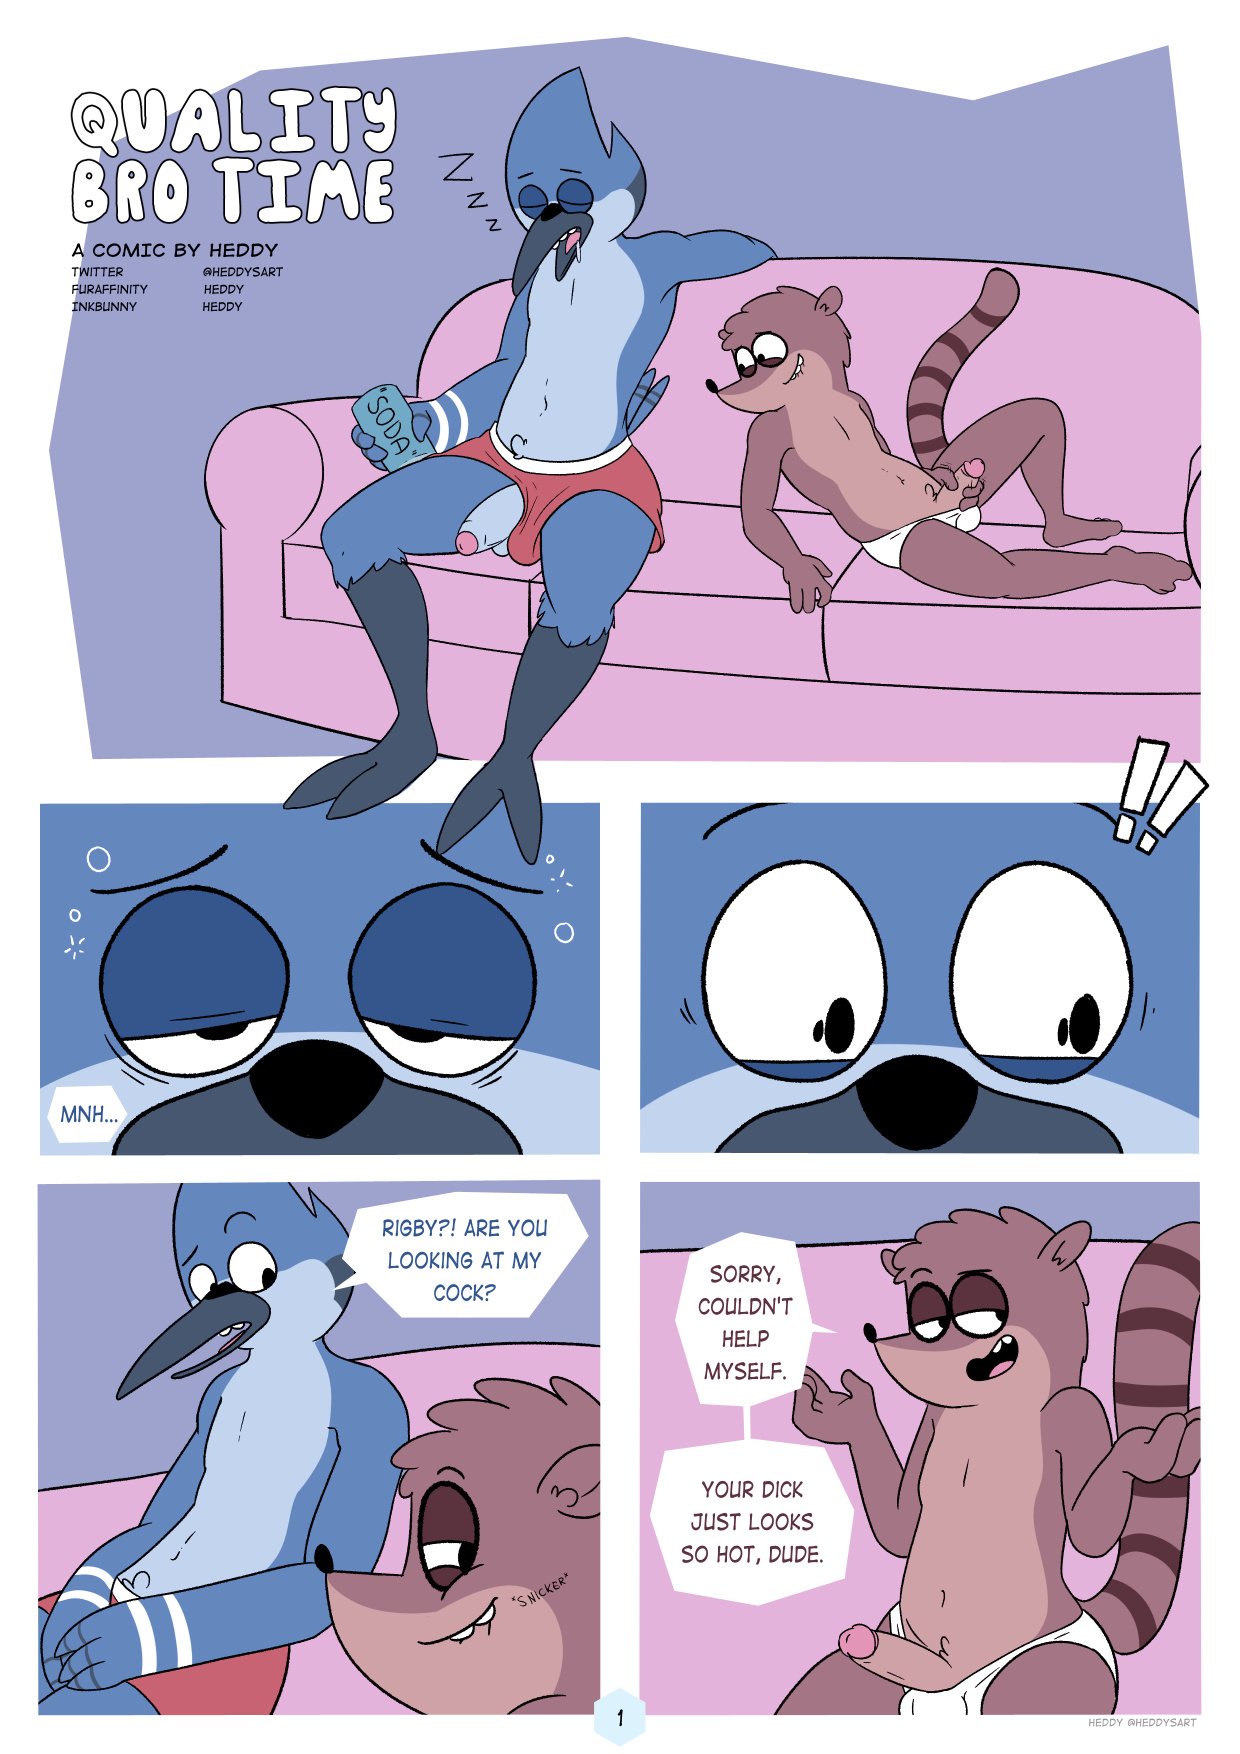 Mordecai and the rigby porn comics